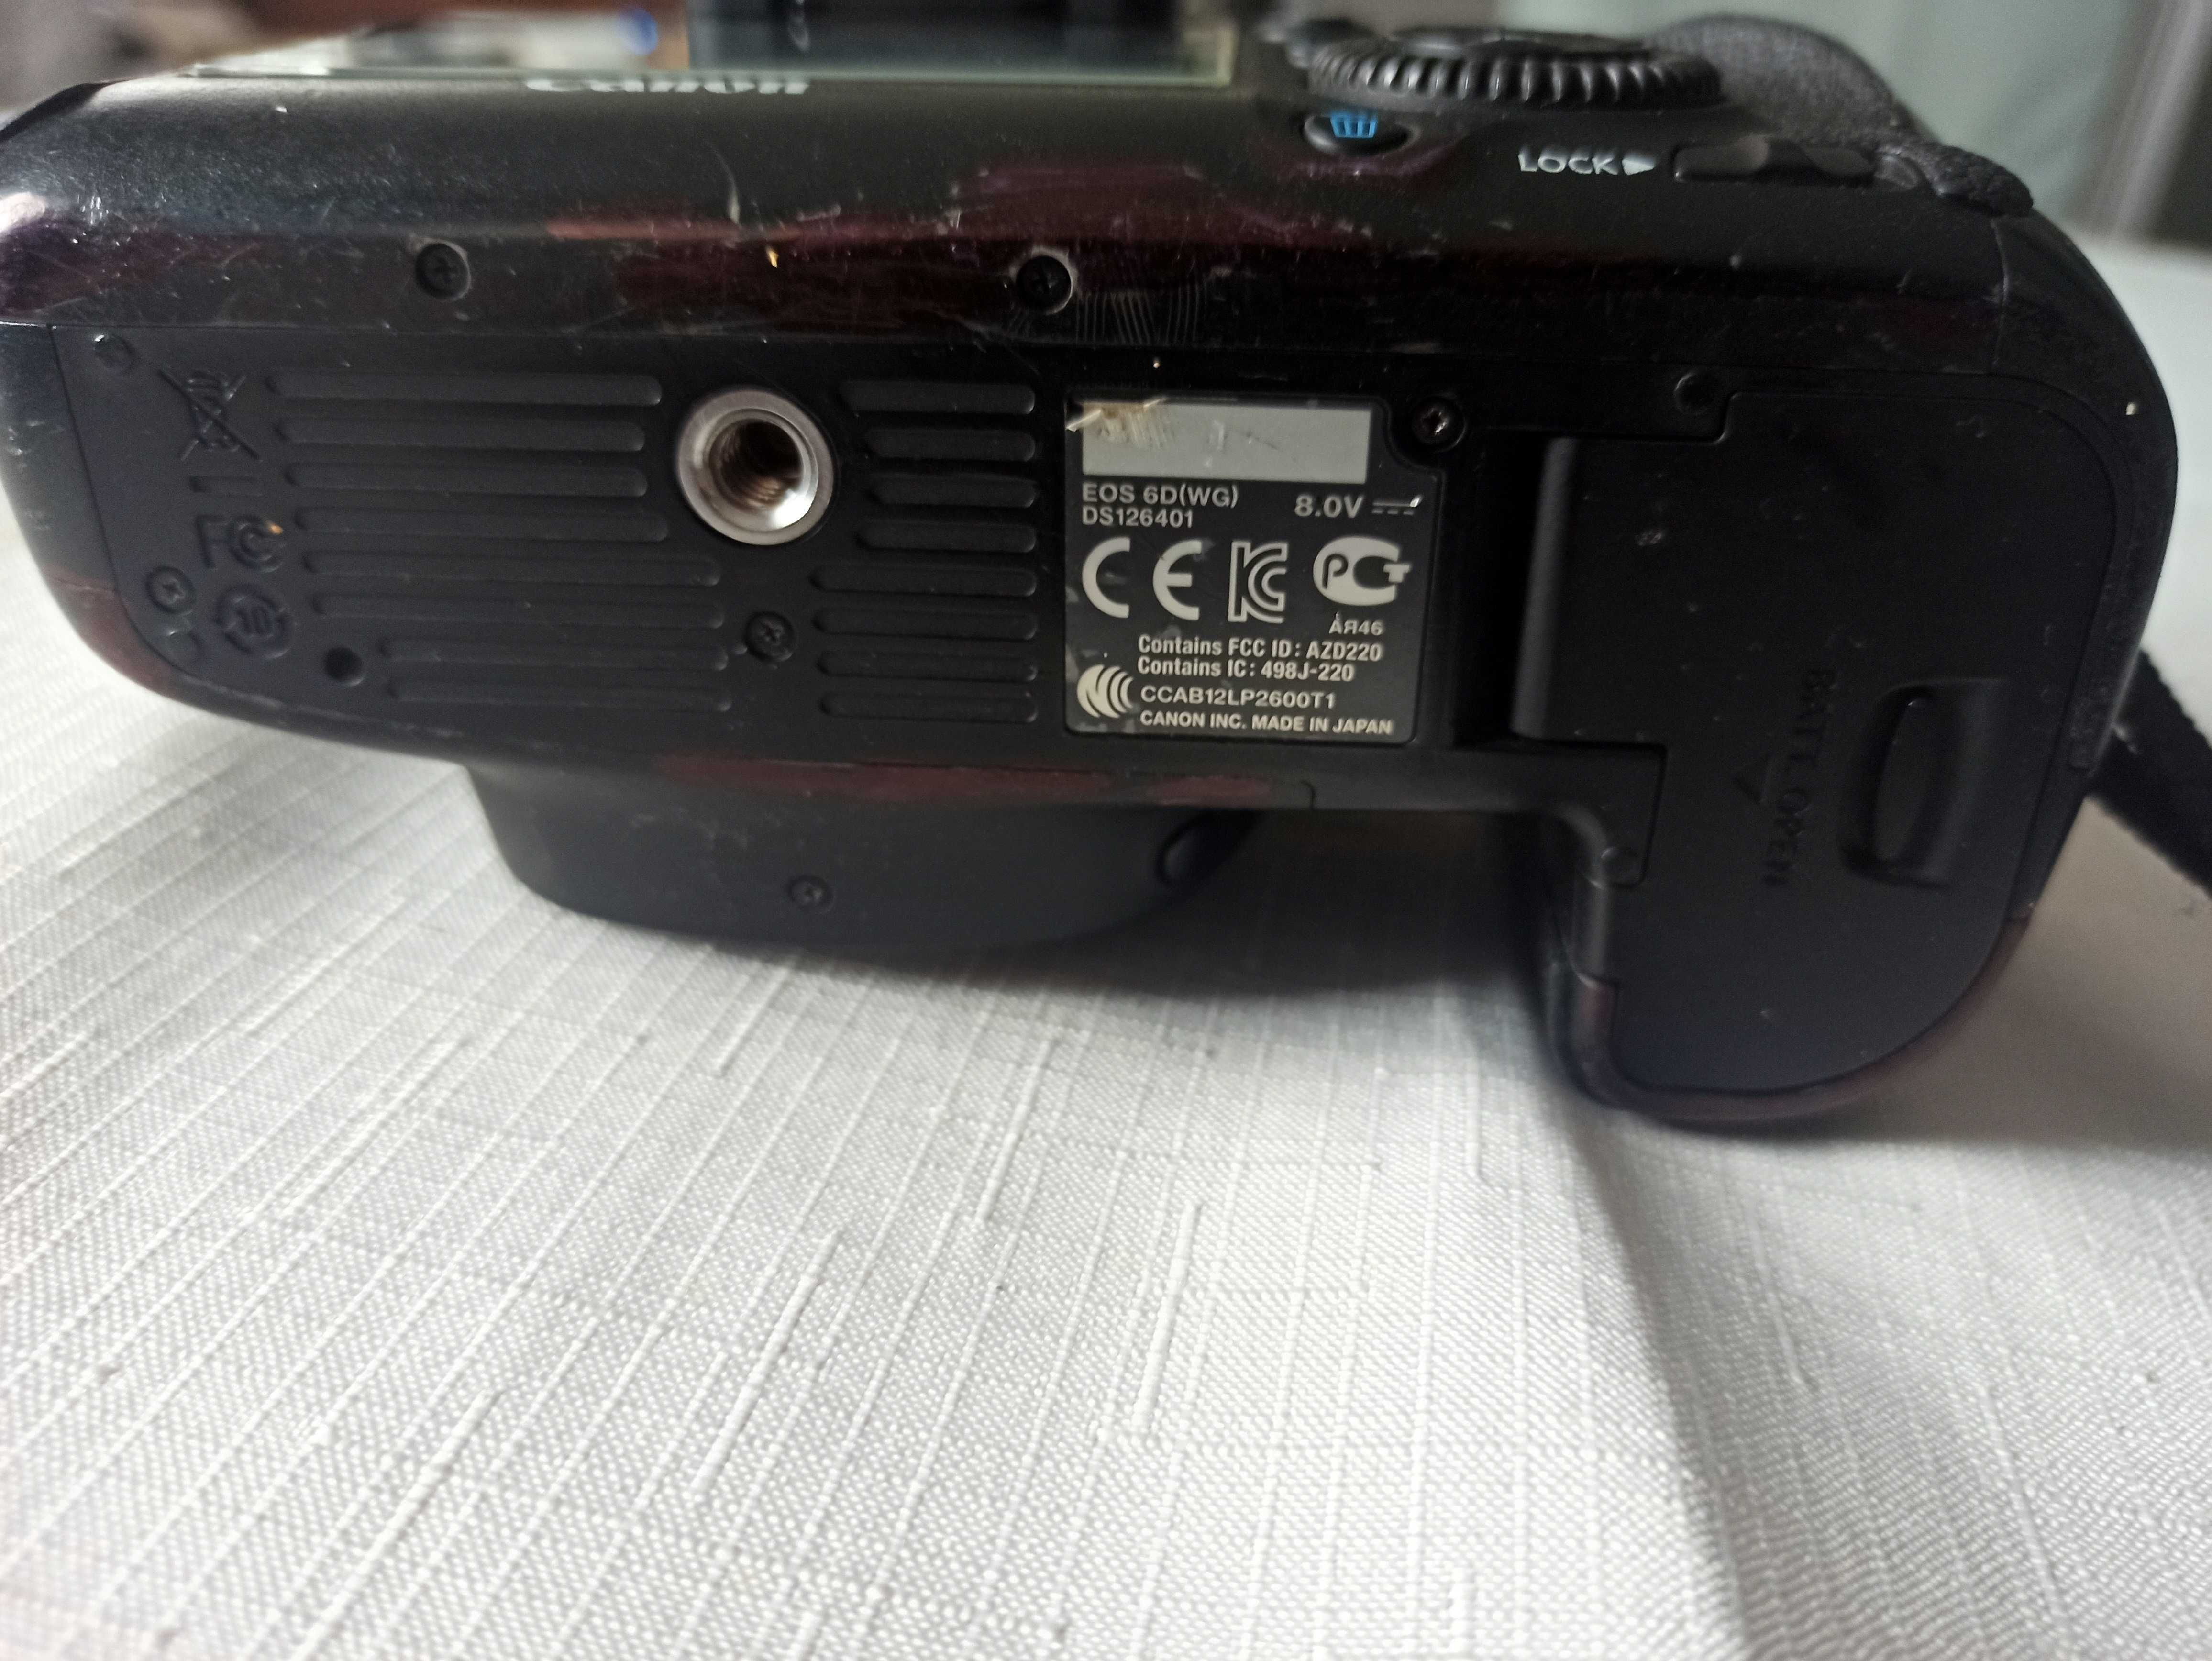 Pełnoklatkowy Aparat Canon 6D